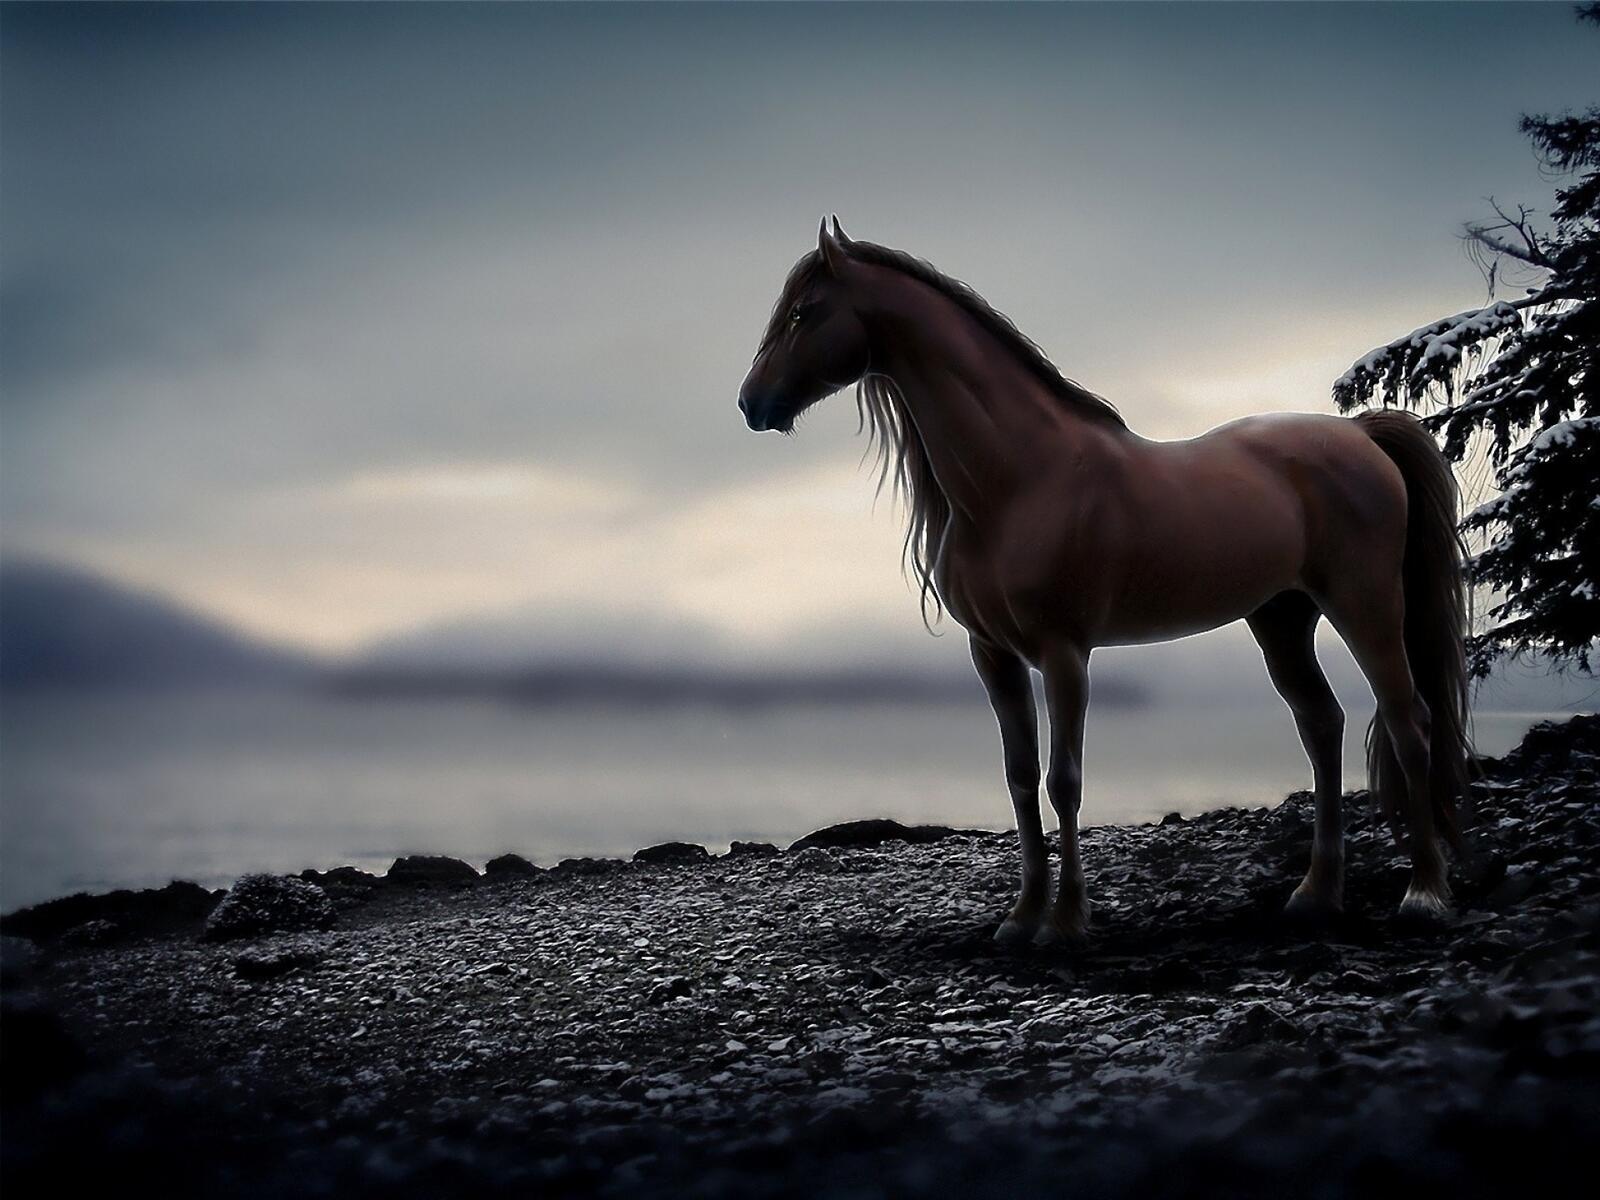 Бесплатное фото Лошадь на берегу реки